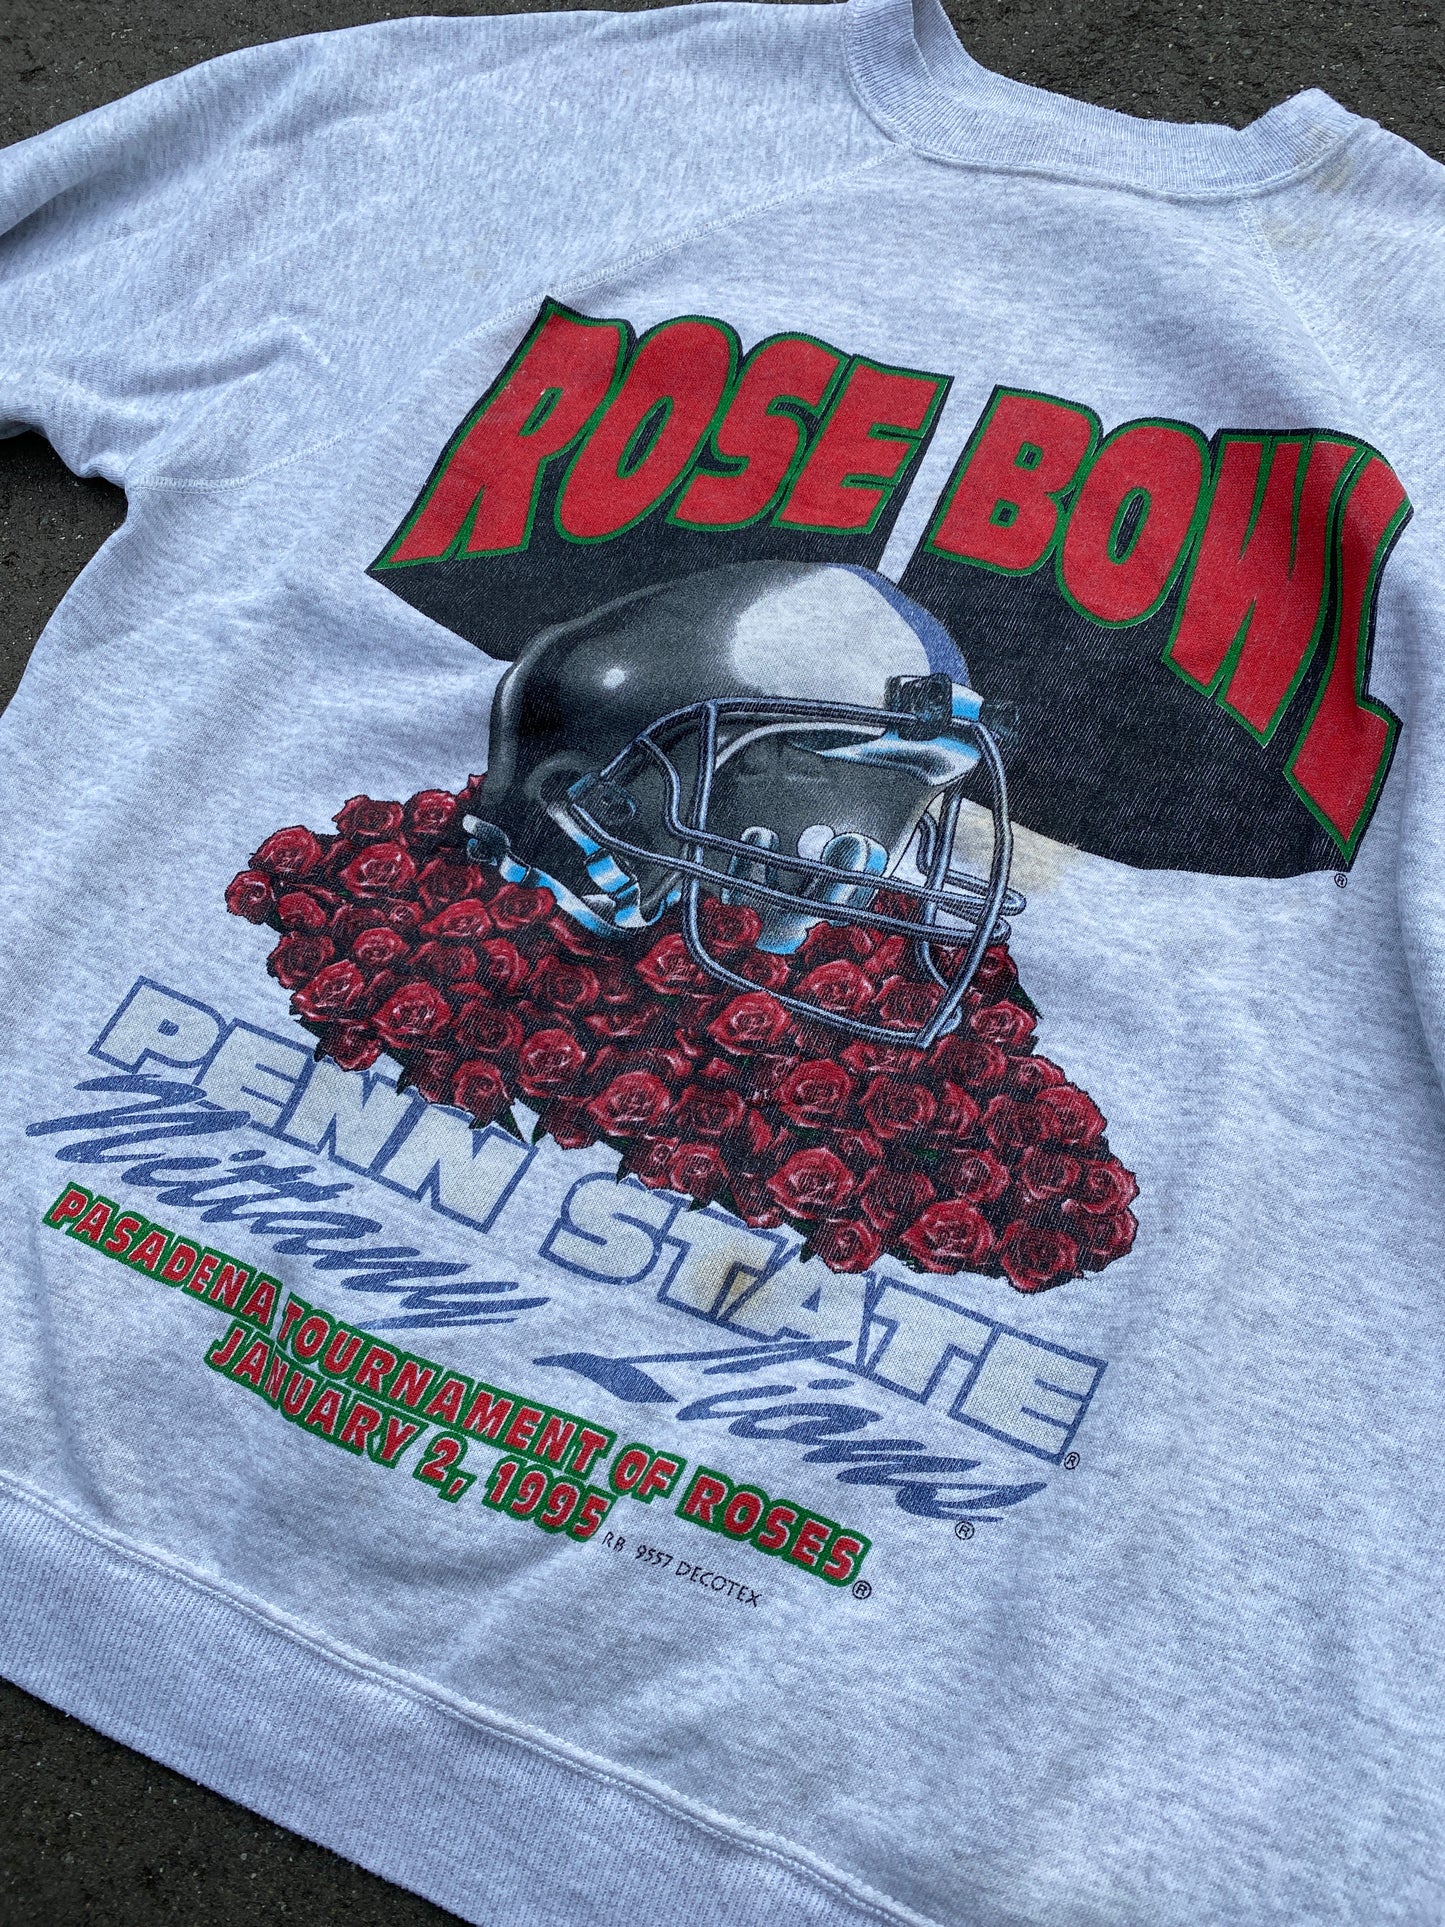 NFL Rose Bowl Penn State sweater (S)